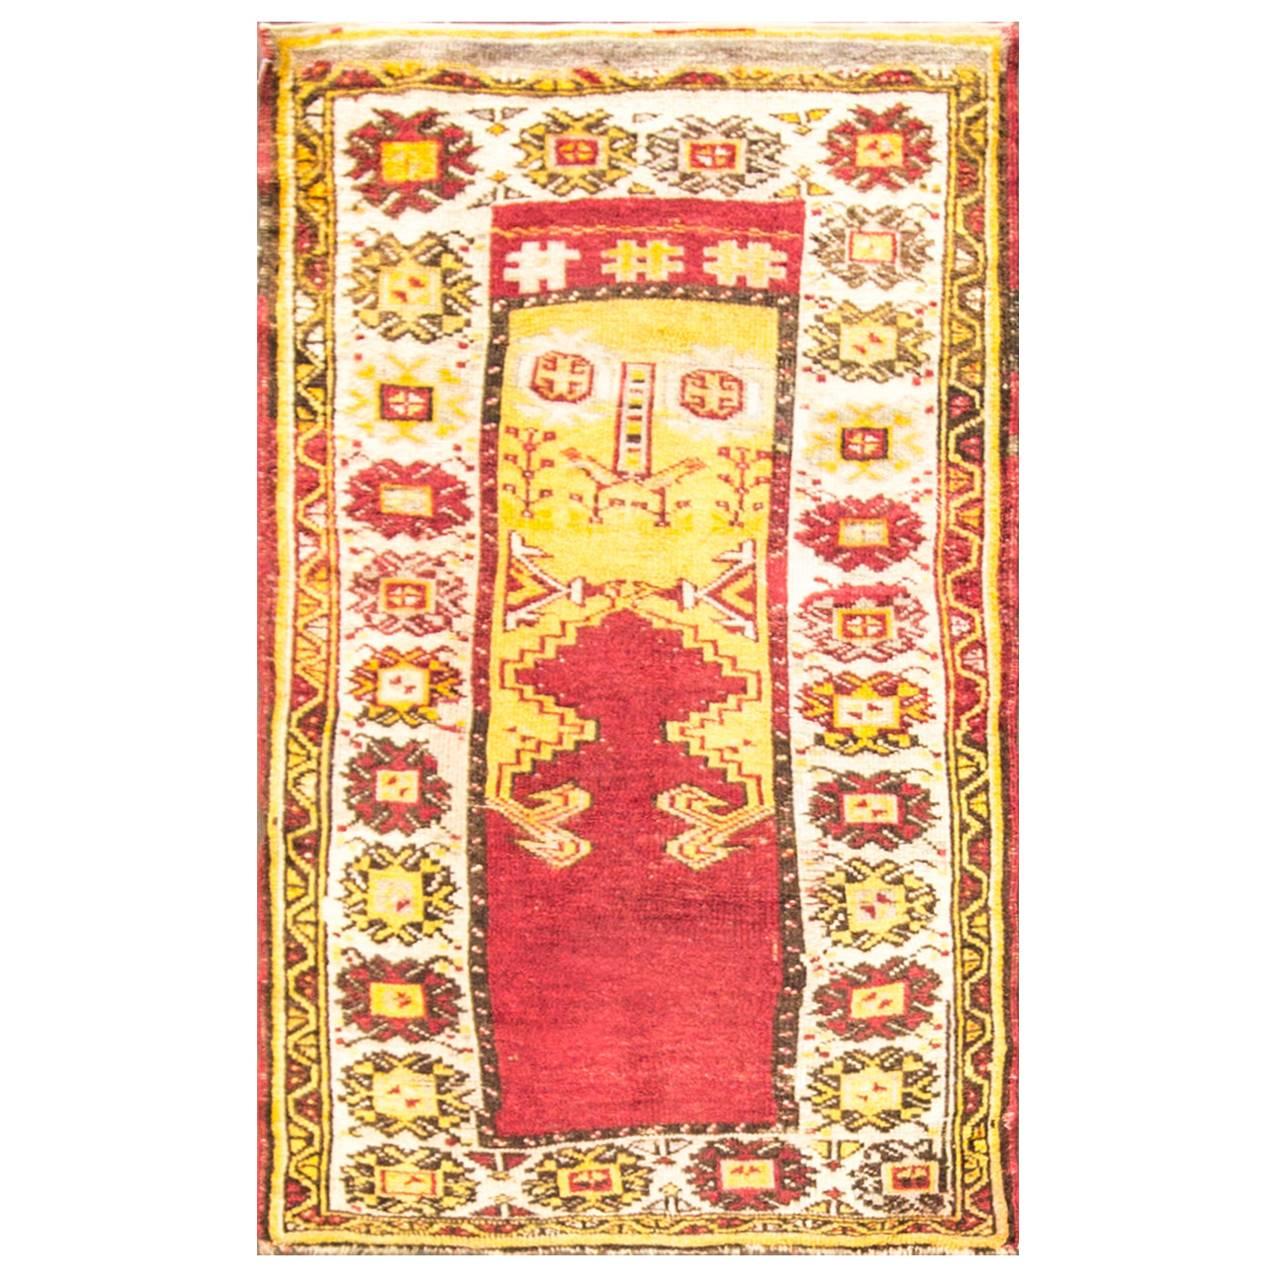  Antique Anatolian Oushak Rug, 3'3" x 4'5", Free Shipping For Sale